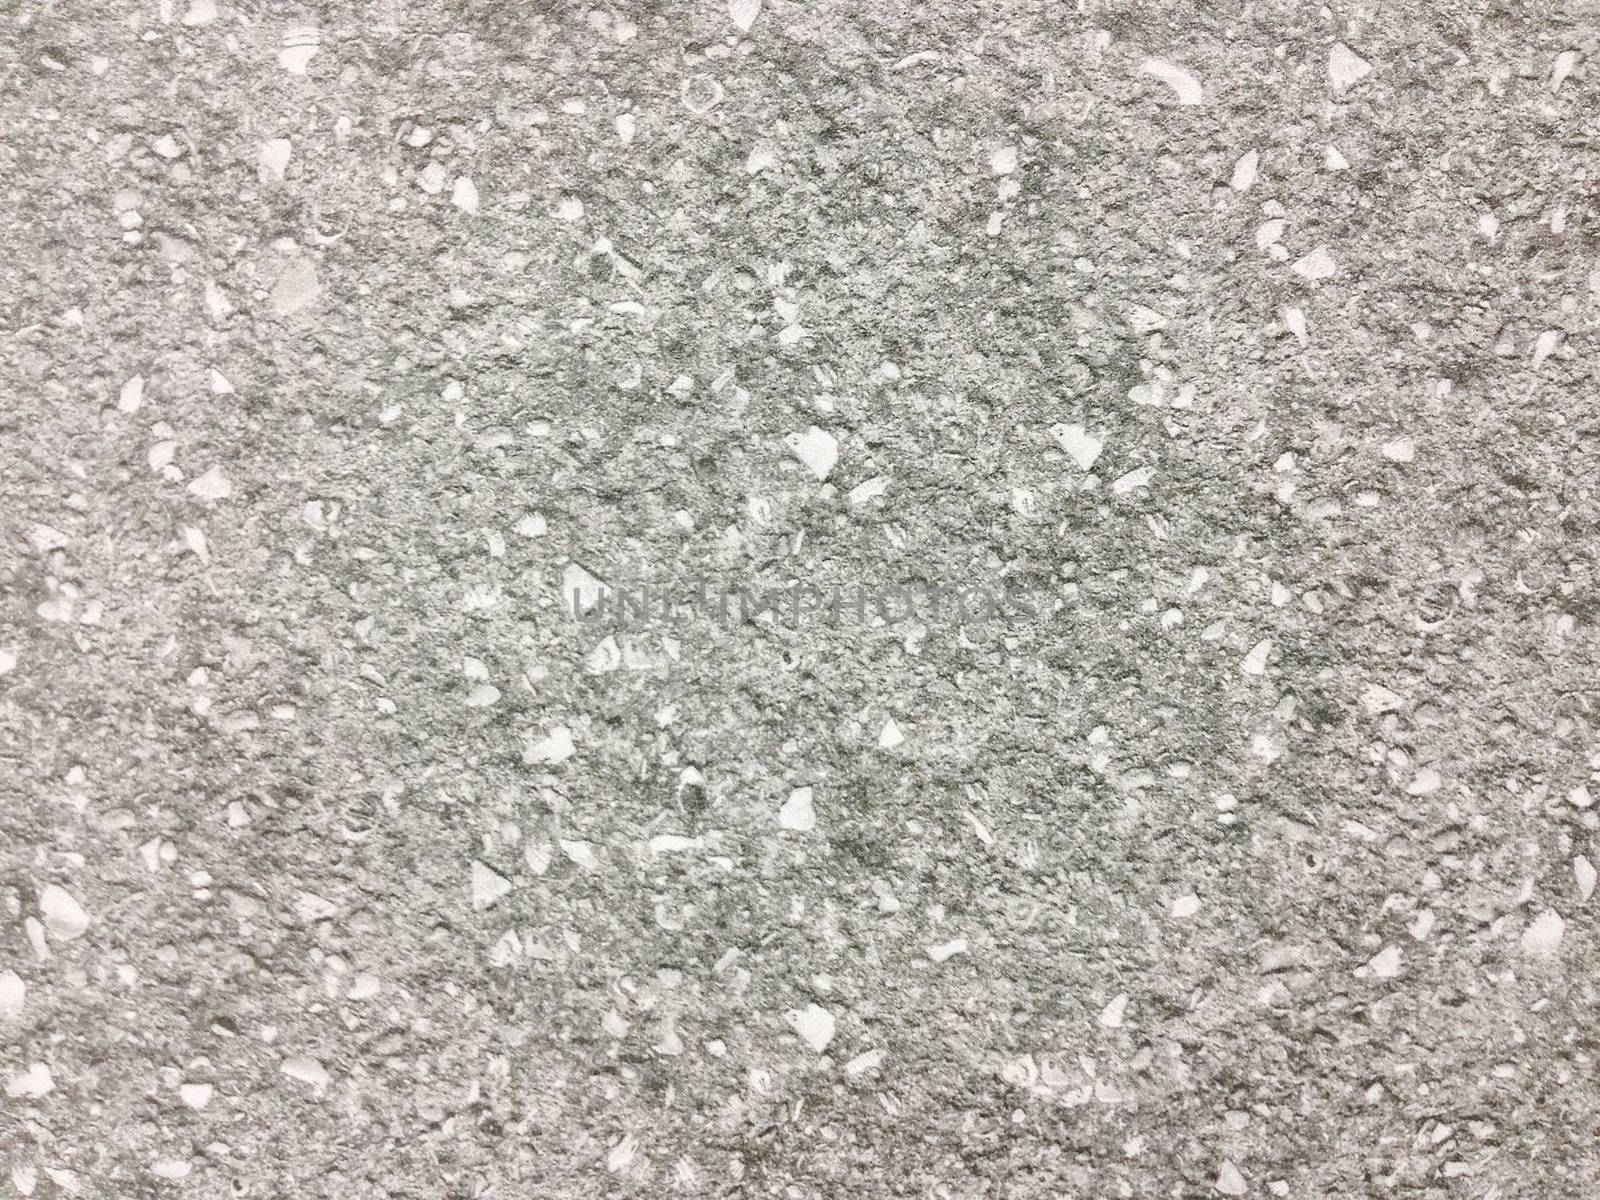 Granite stone ceramic tiles texture and background